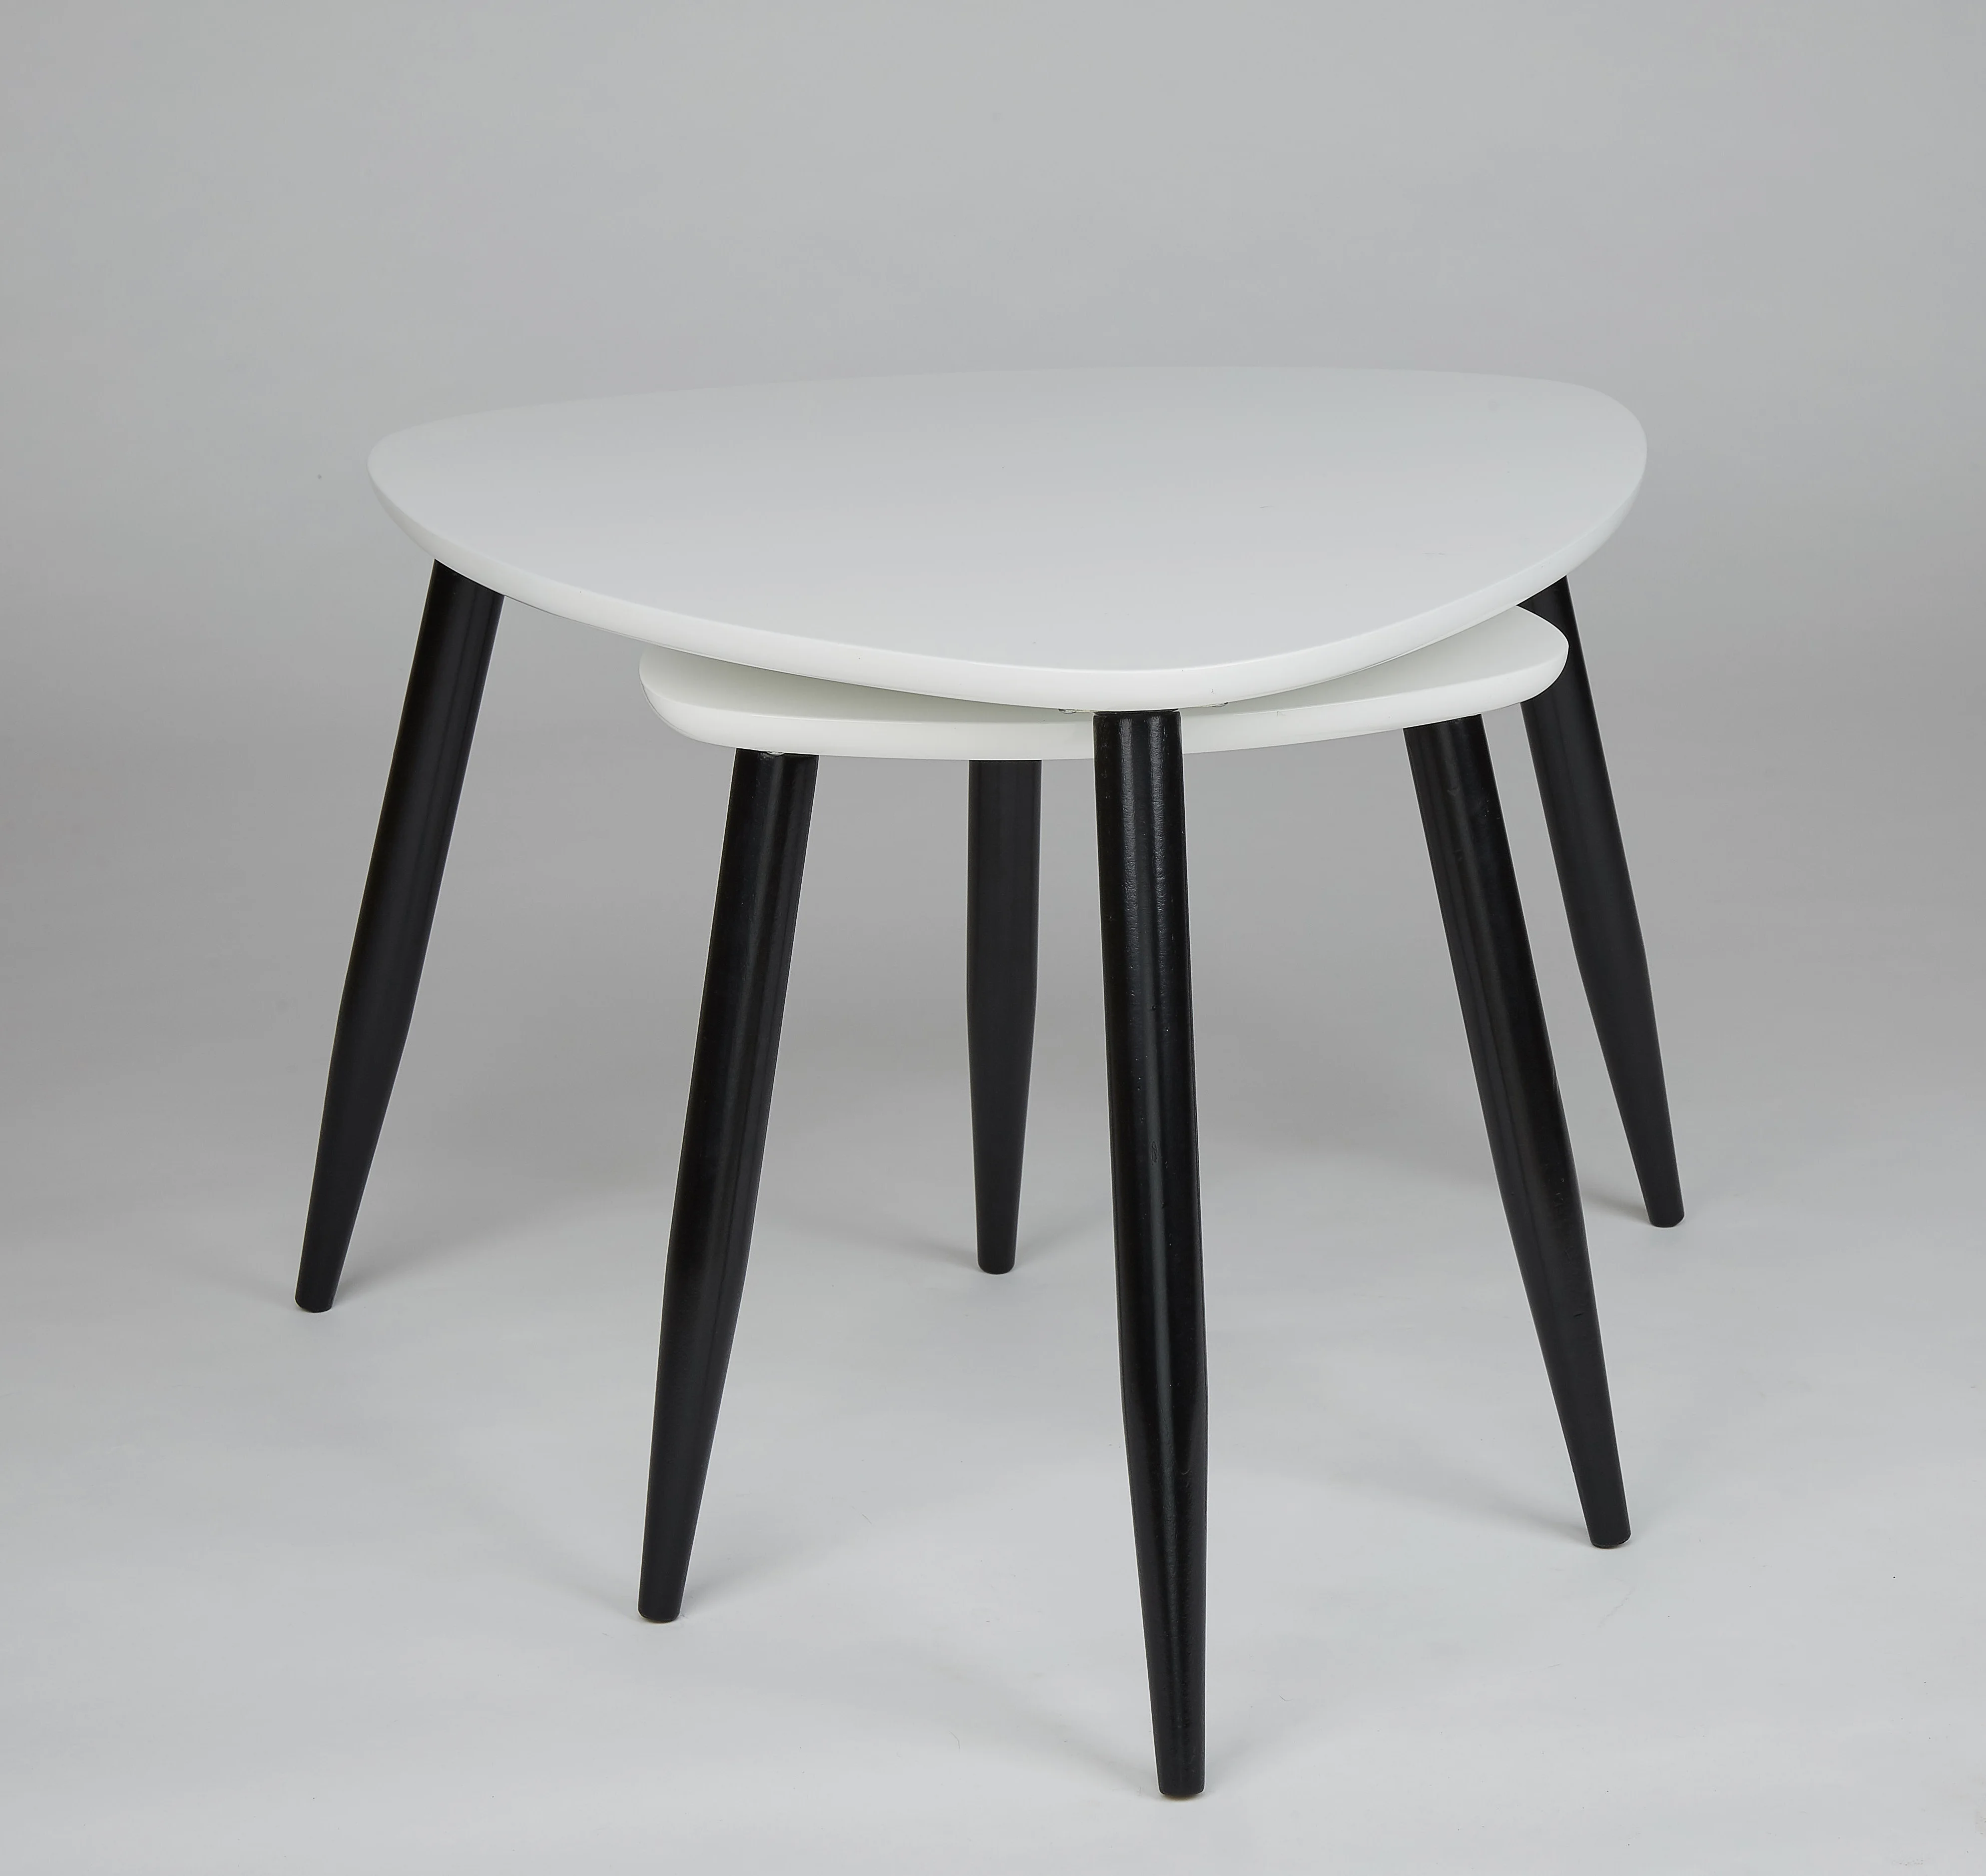 2019 High Gloss Coffee Table Home Furniture Buy Coffee Table Home Furniture Product On Alibaba Com